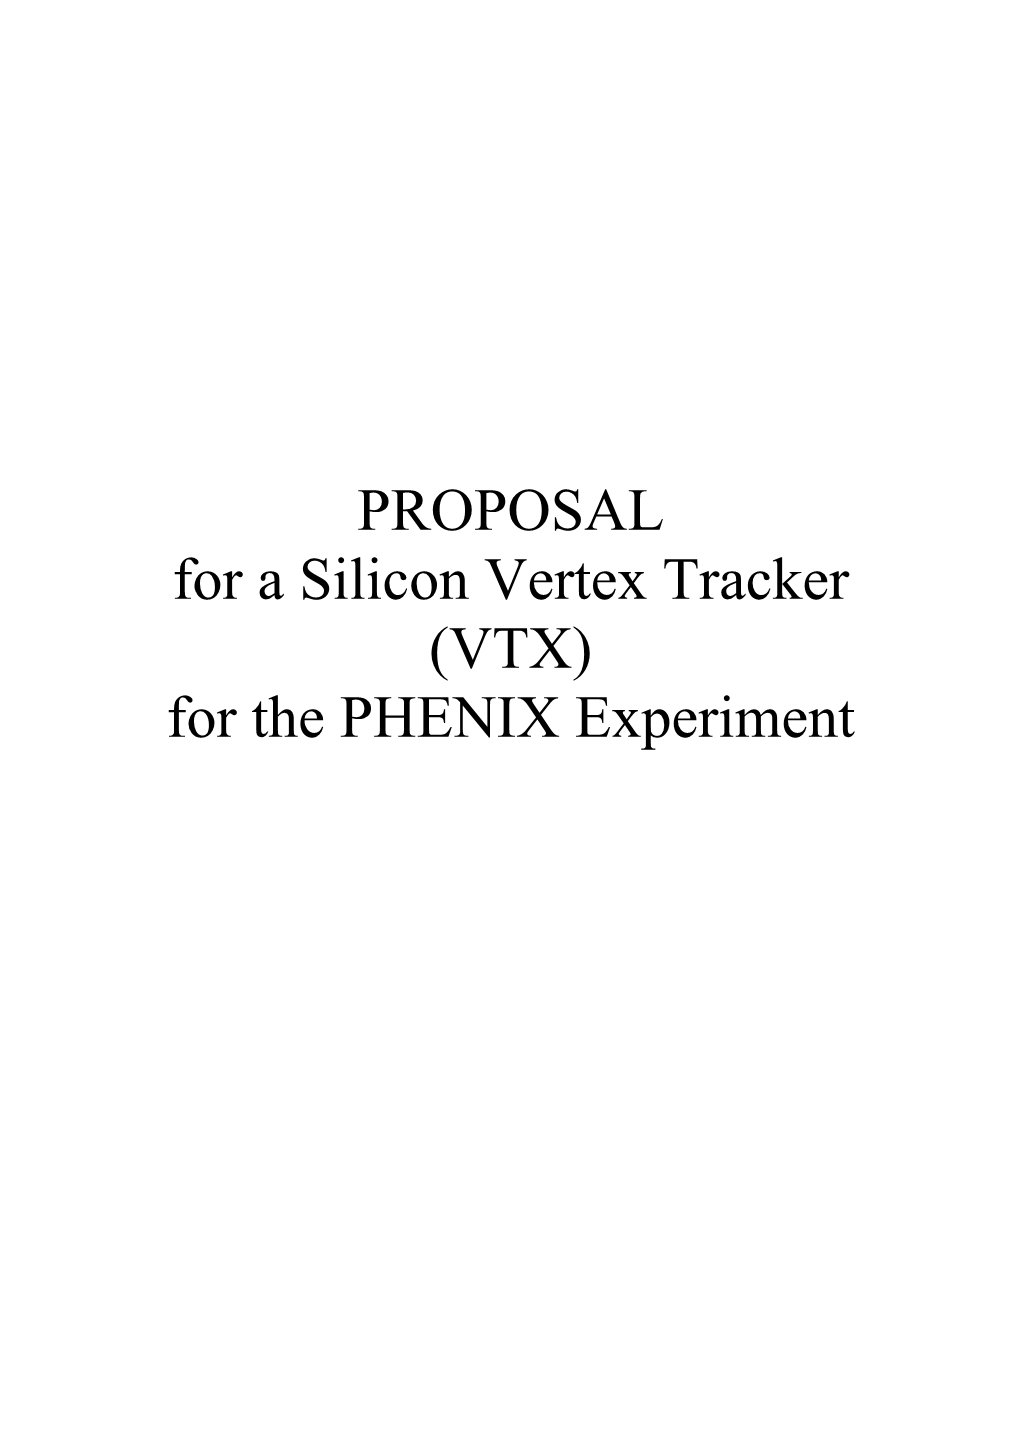 PROPOSAL for a Silicon Vertex Tracker (VTX) for the PHENIX Experiment Proposal for a Silicon Vertex Tracker (VTX) for the PHENIX Experiment